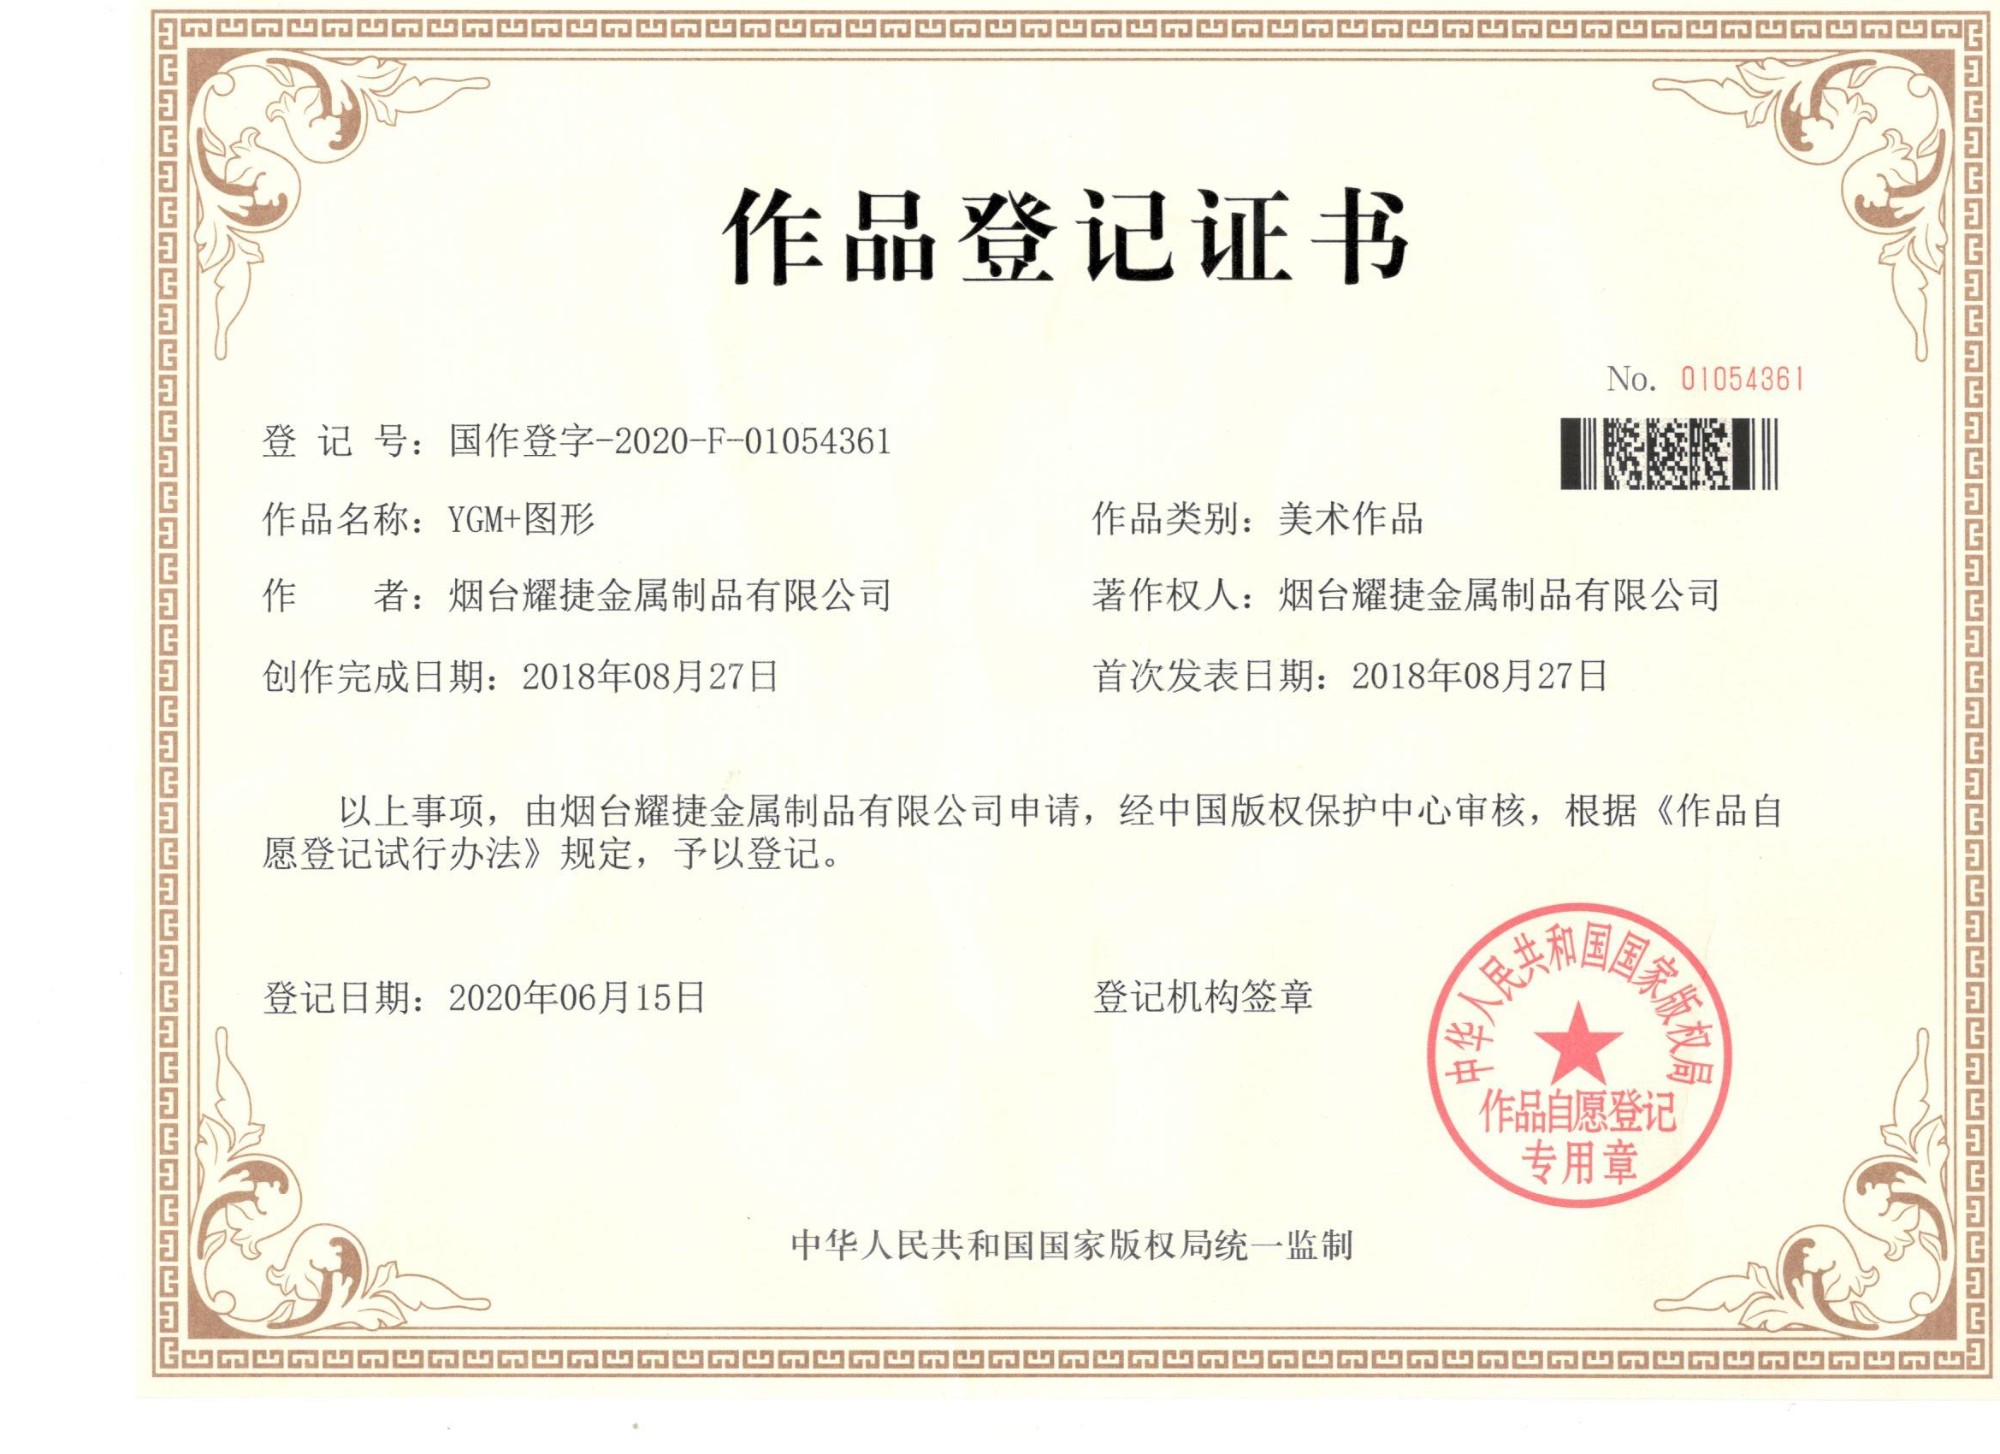 Certificate of Trademark copyright